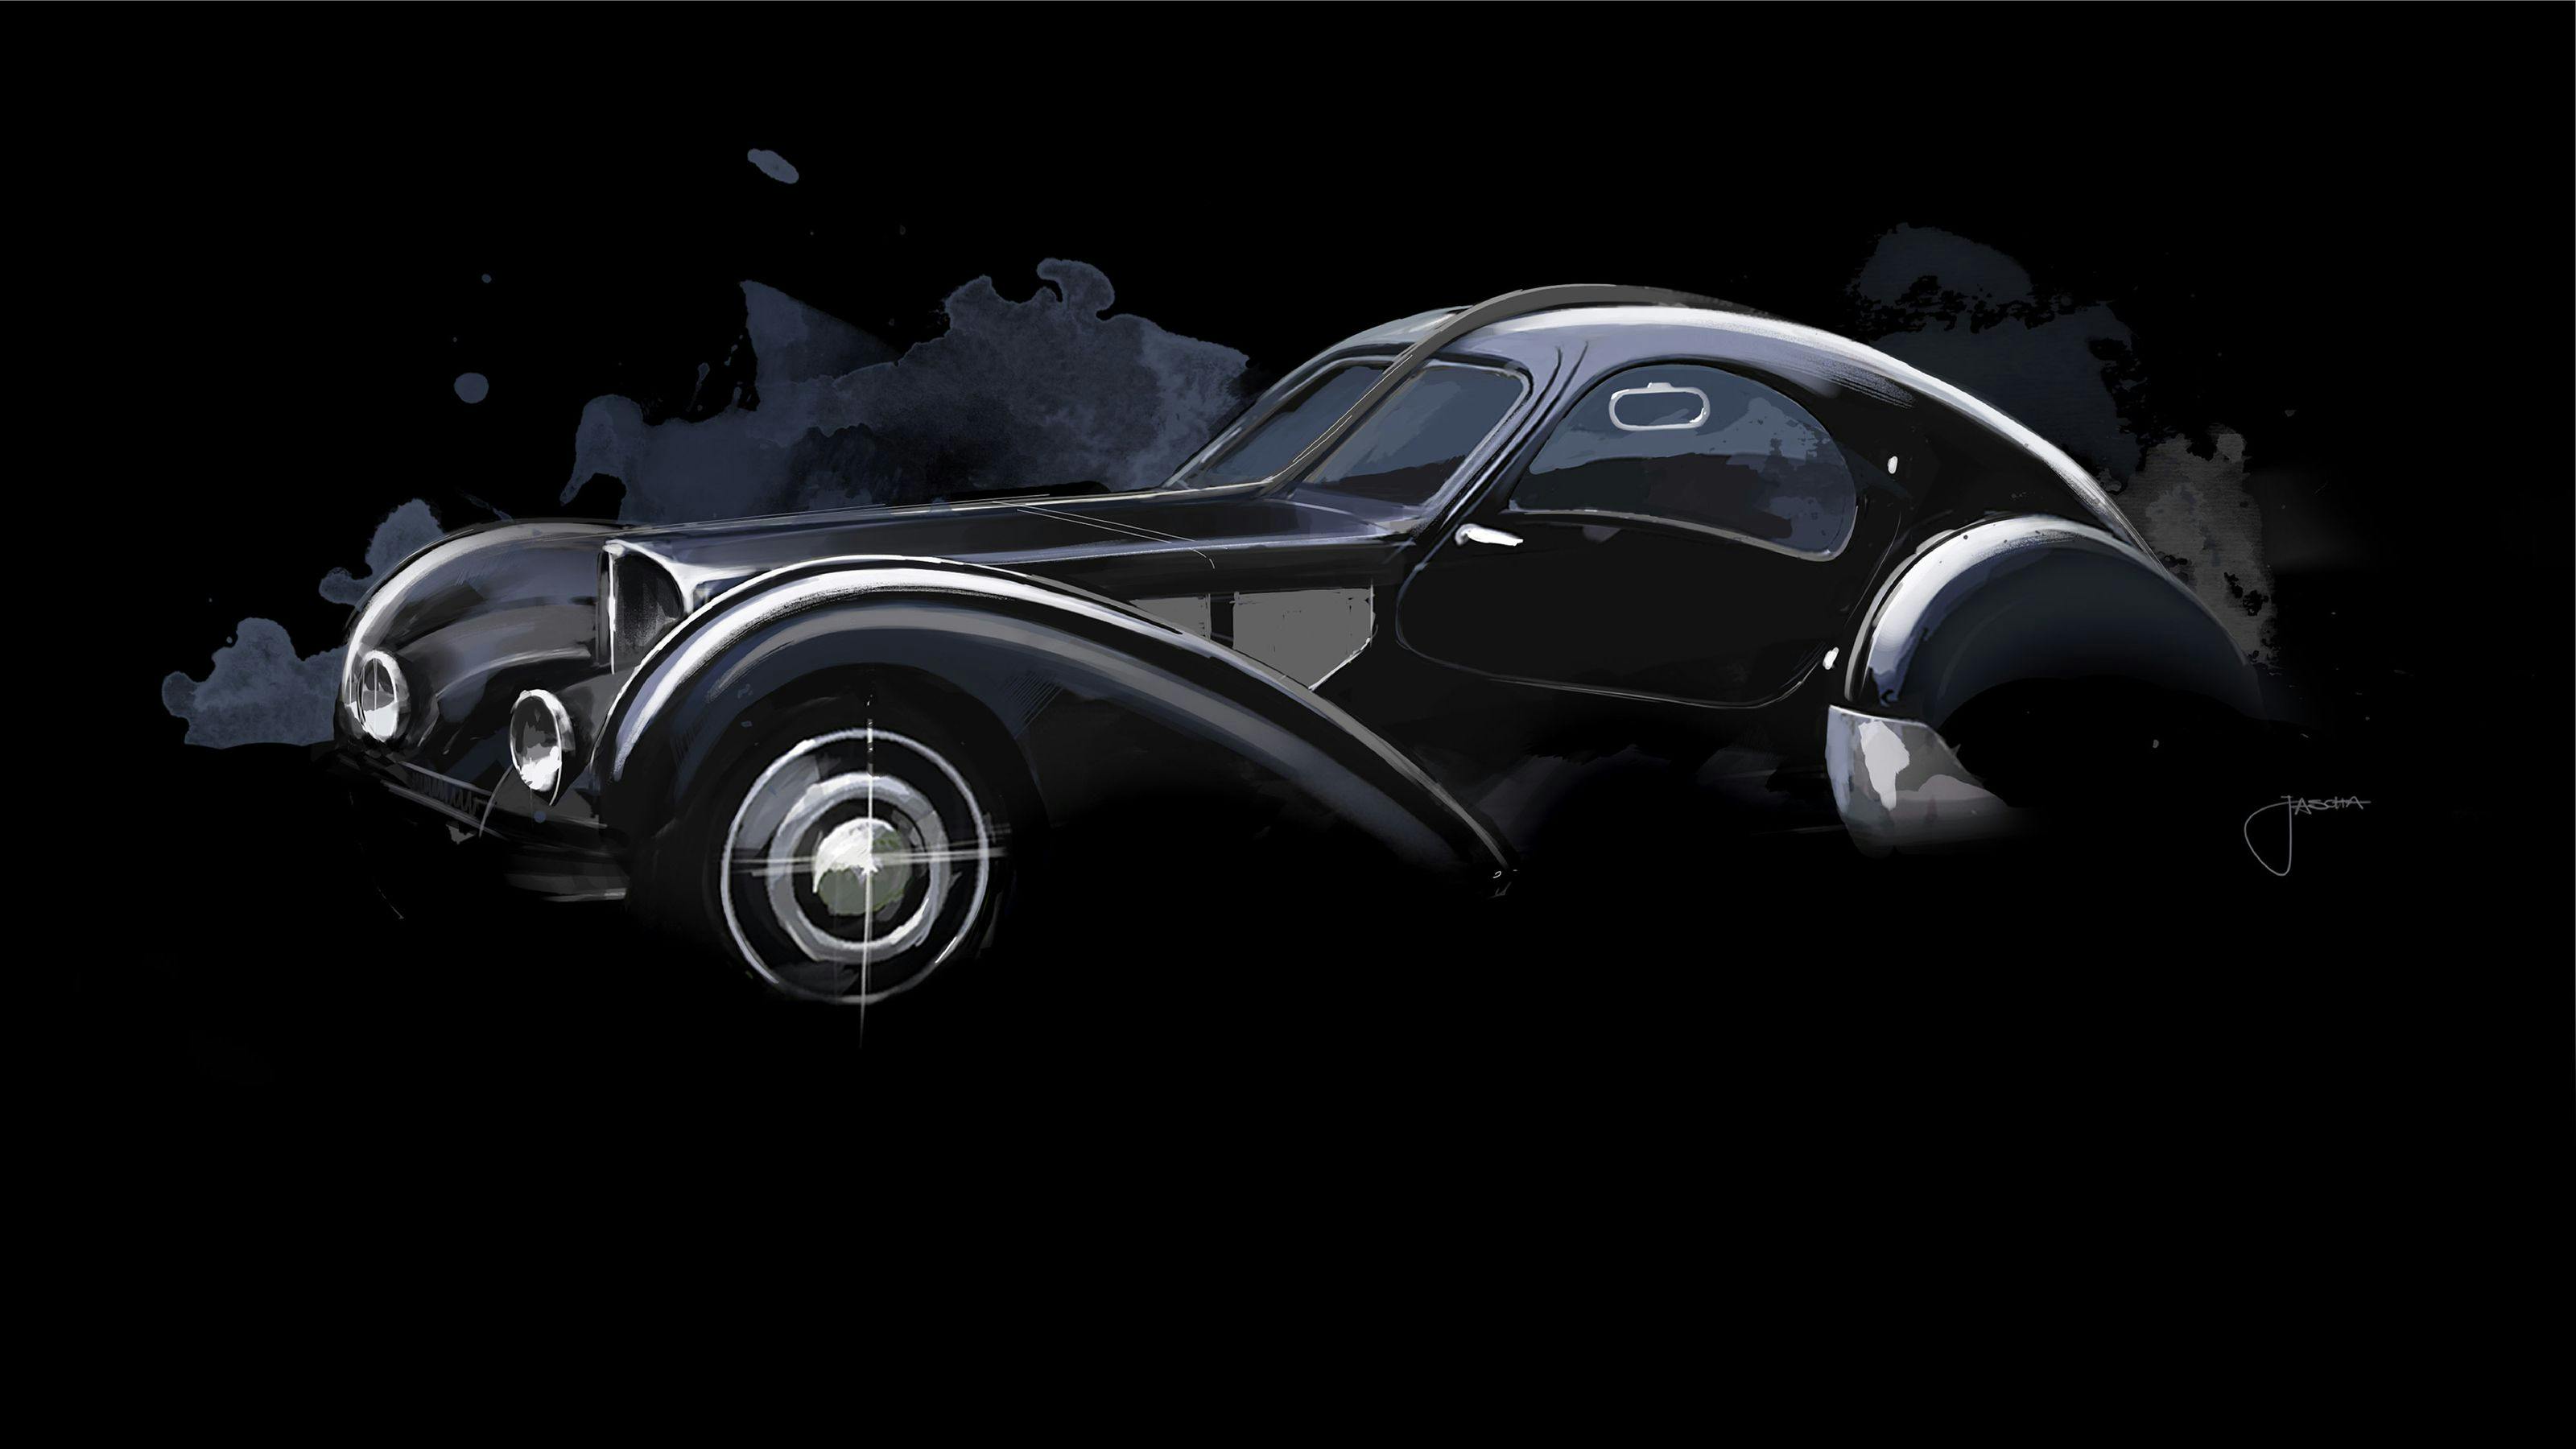 The Bugatti Type 57 SC Atlantic – a style icon